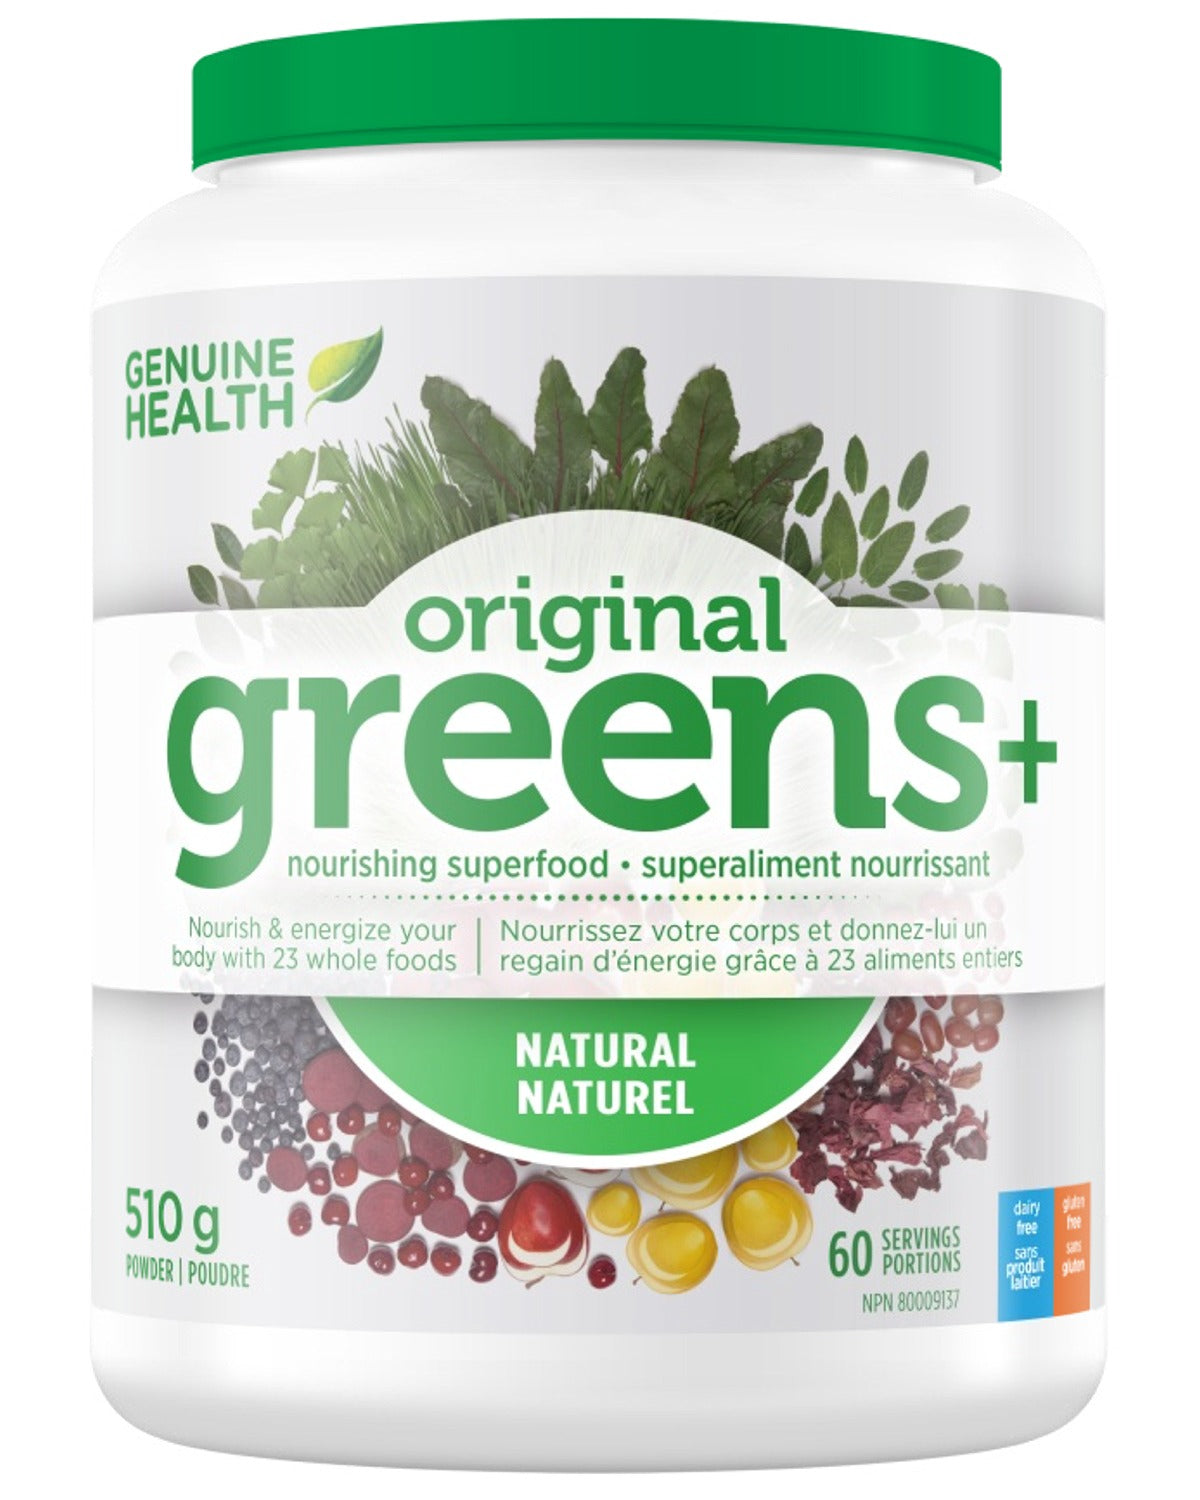 GENUINE HEALTH Original Greens+ (Natural